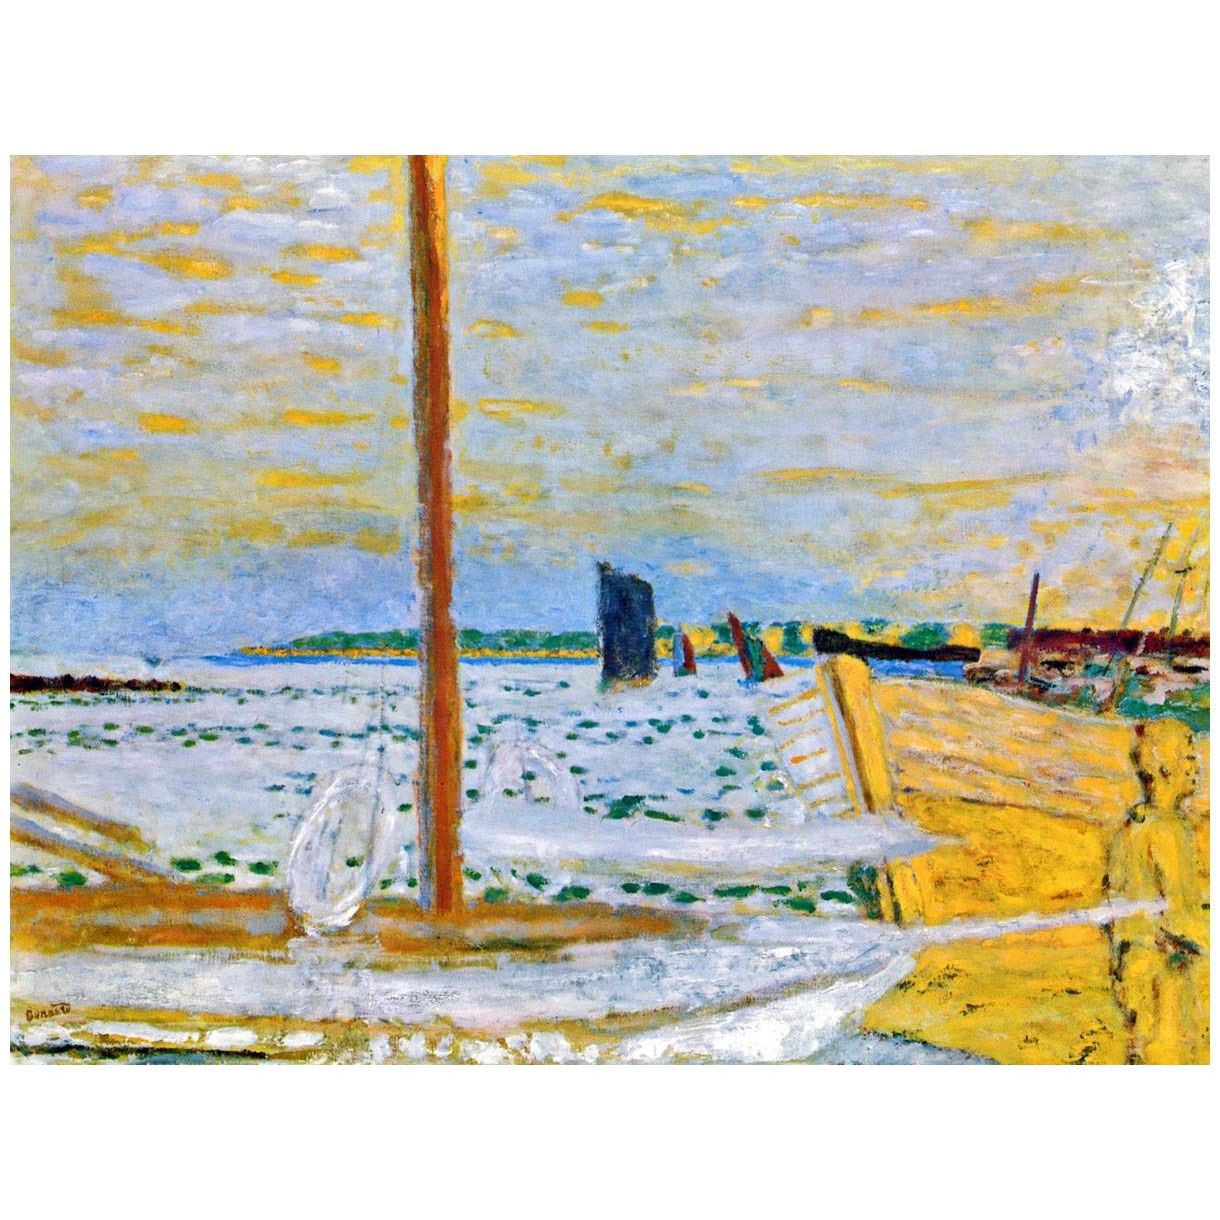 Pierre Bonnard. Le bateau jaune. 1930. Tate Modern London